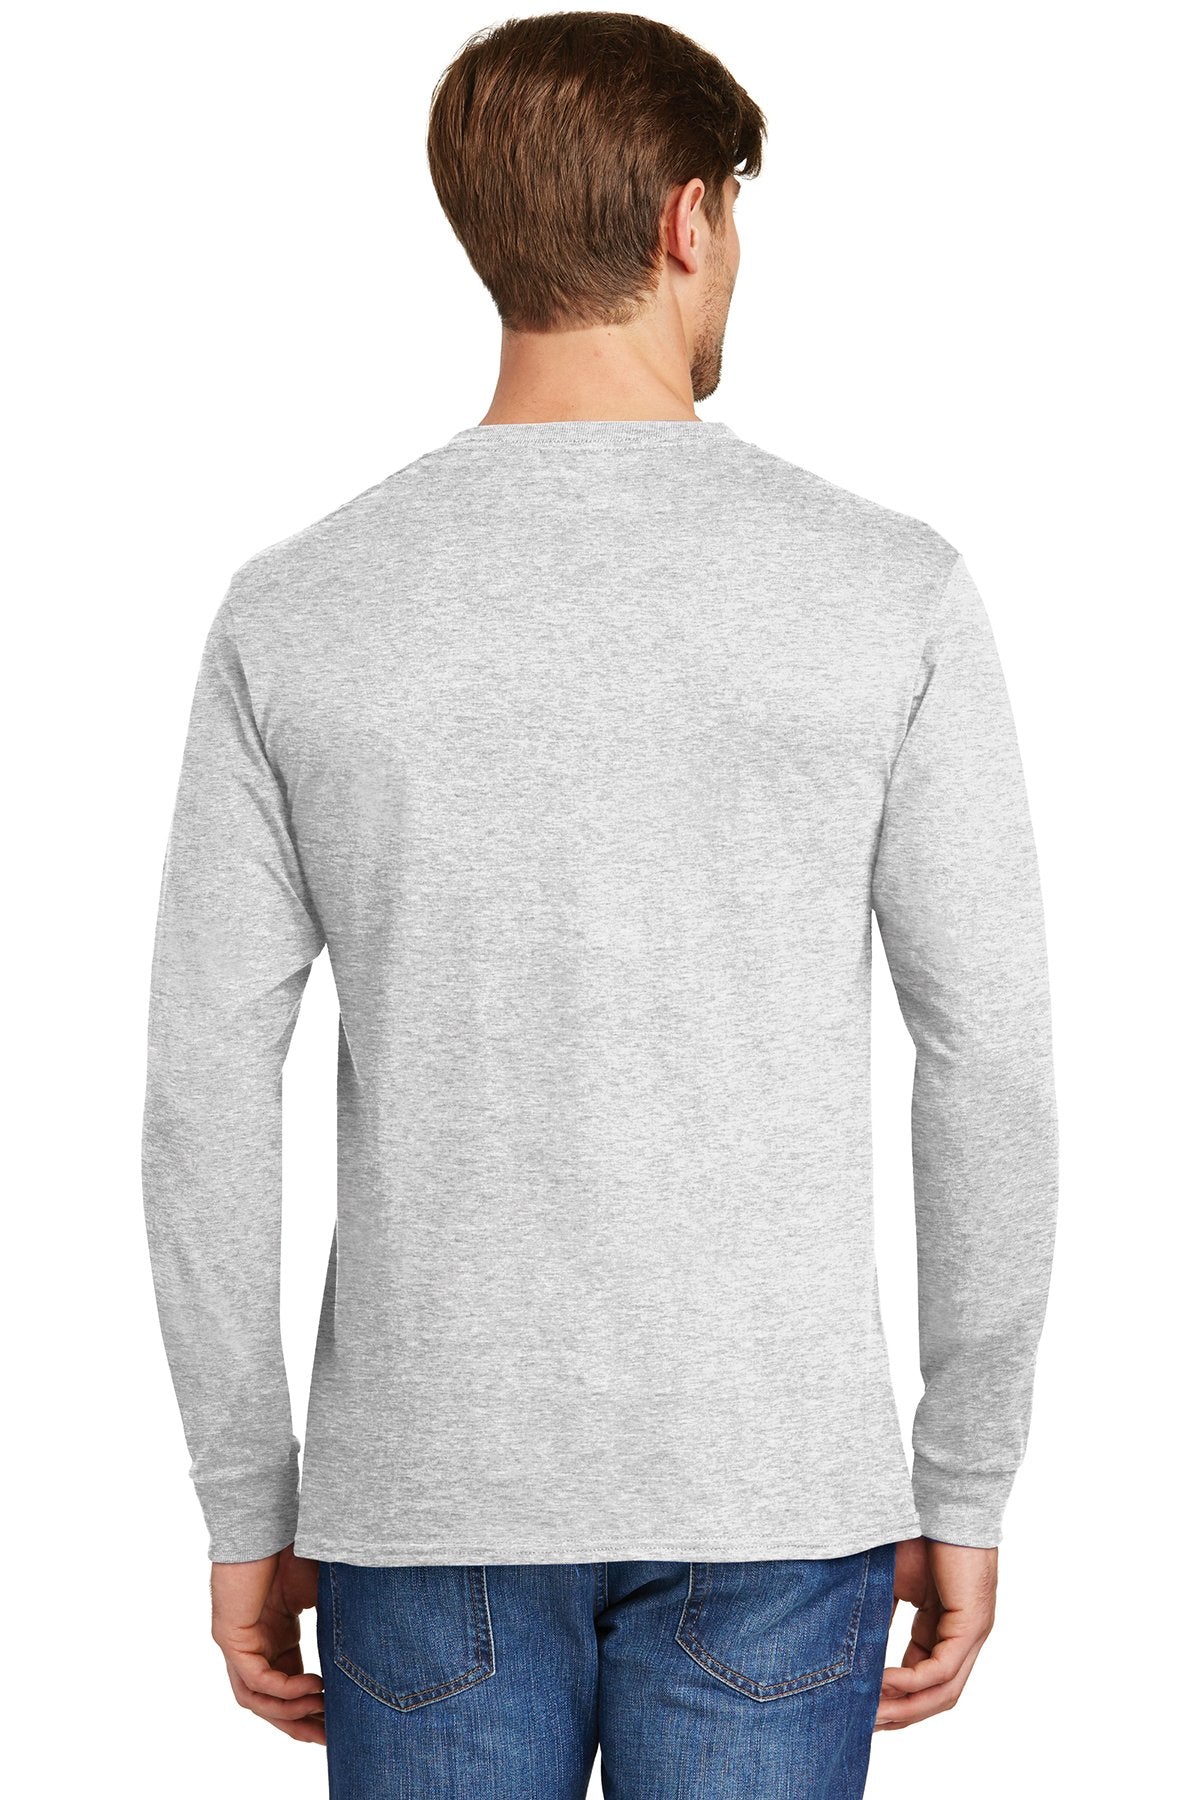 hanes tagless cotton long sleeve t shirt 5586 ash